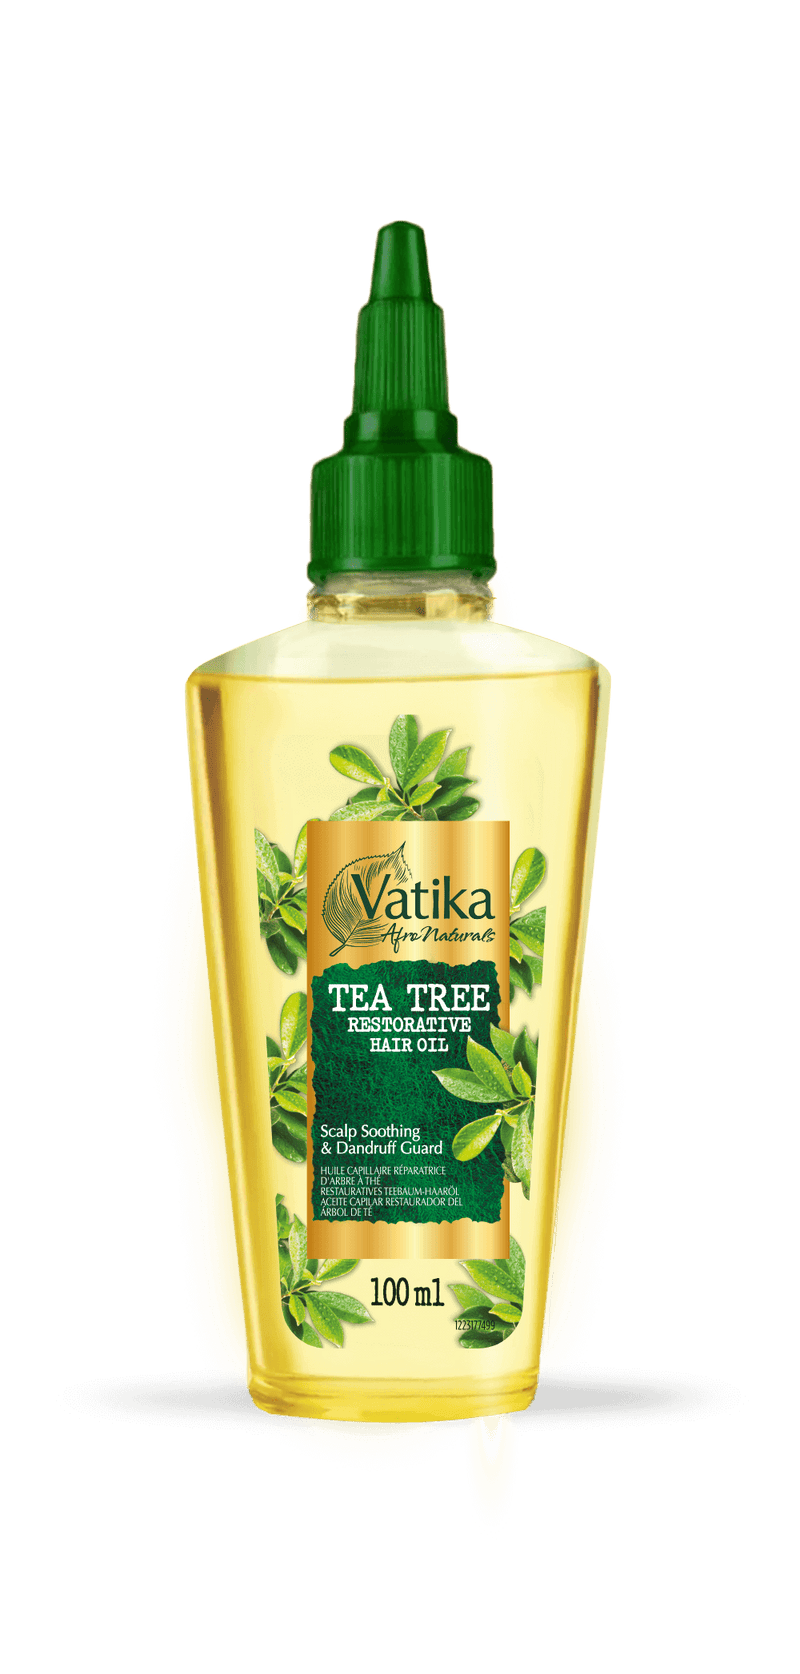 Vatika Vatika Afro Naturals Tea Tree Hair Oil 100ml